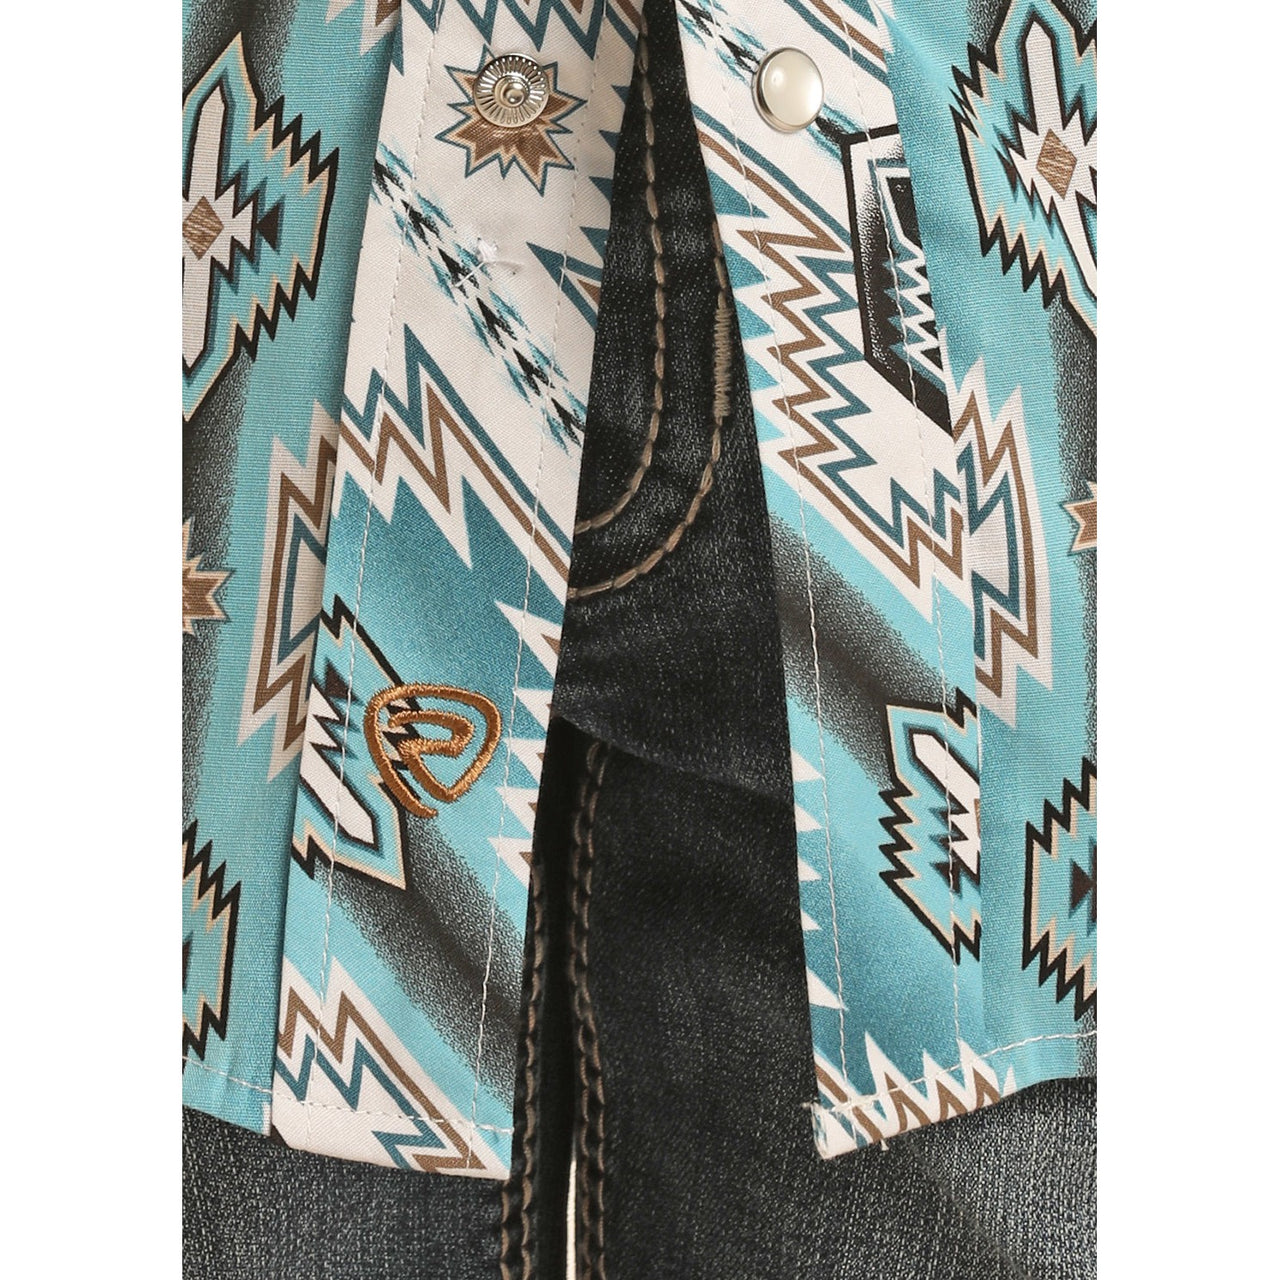 Rock & Roll Boy's Long Sleeve 2 Pocket Aztec Snap Shirt - Turquoise